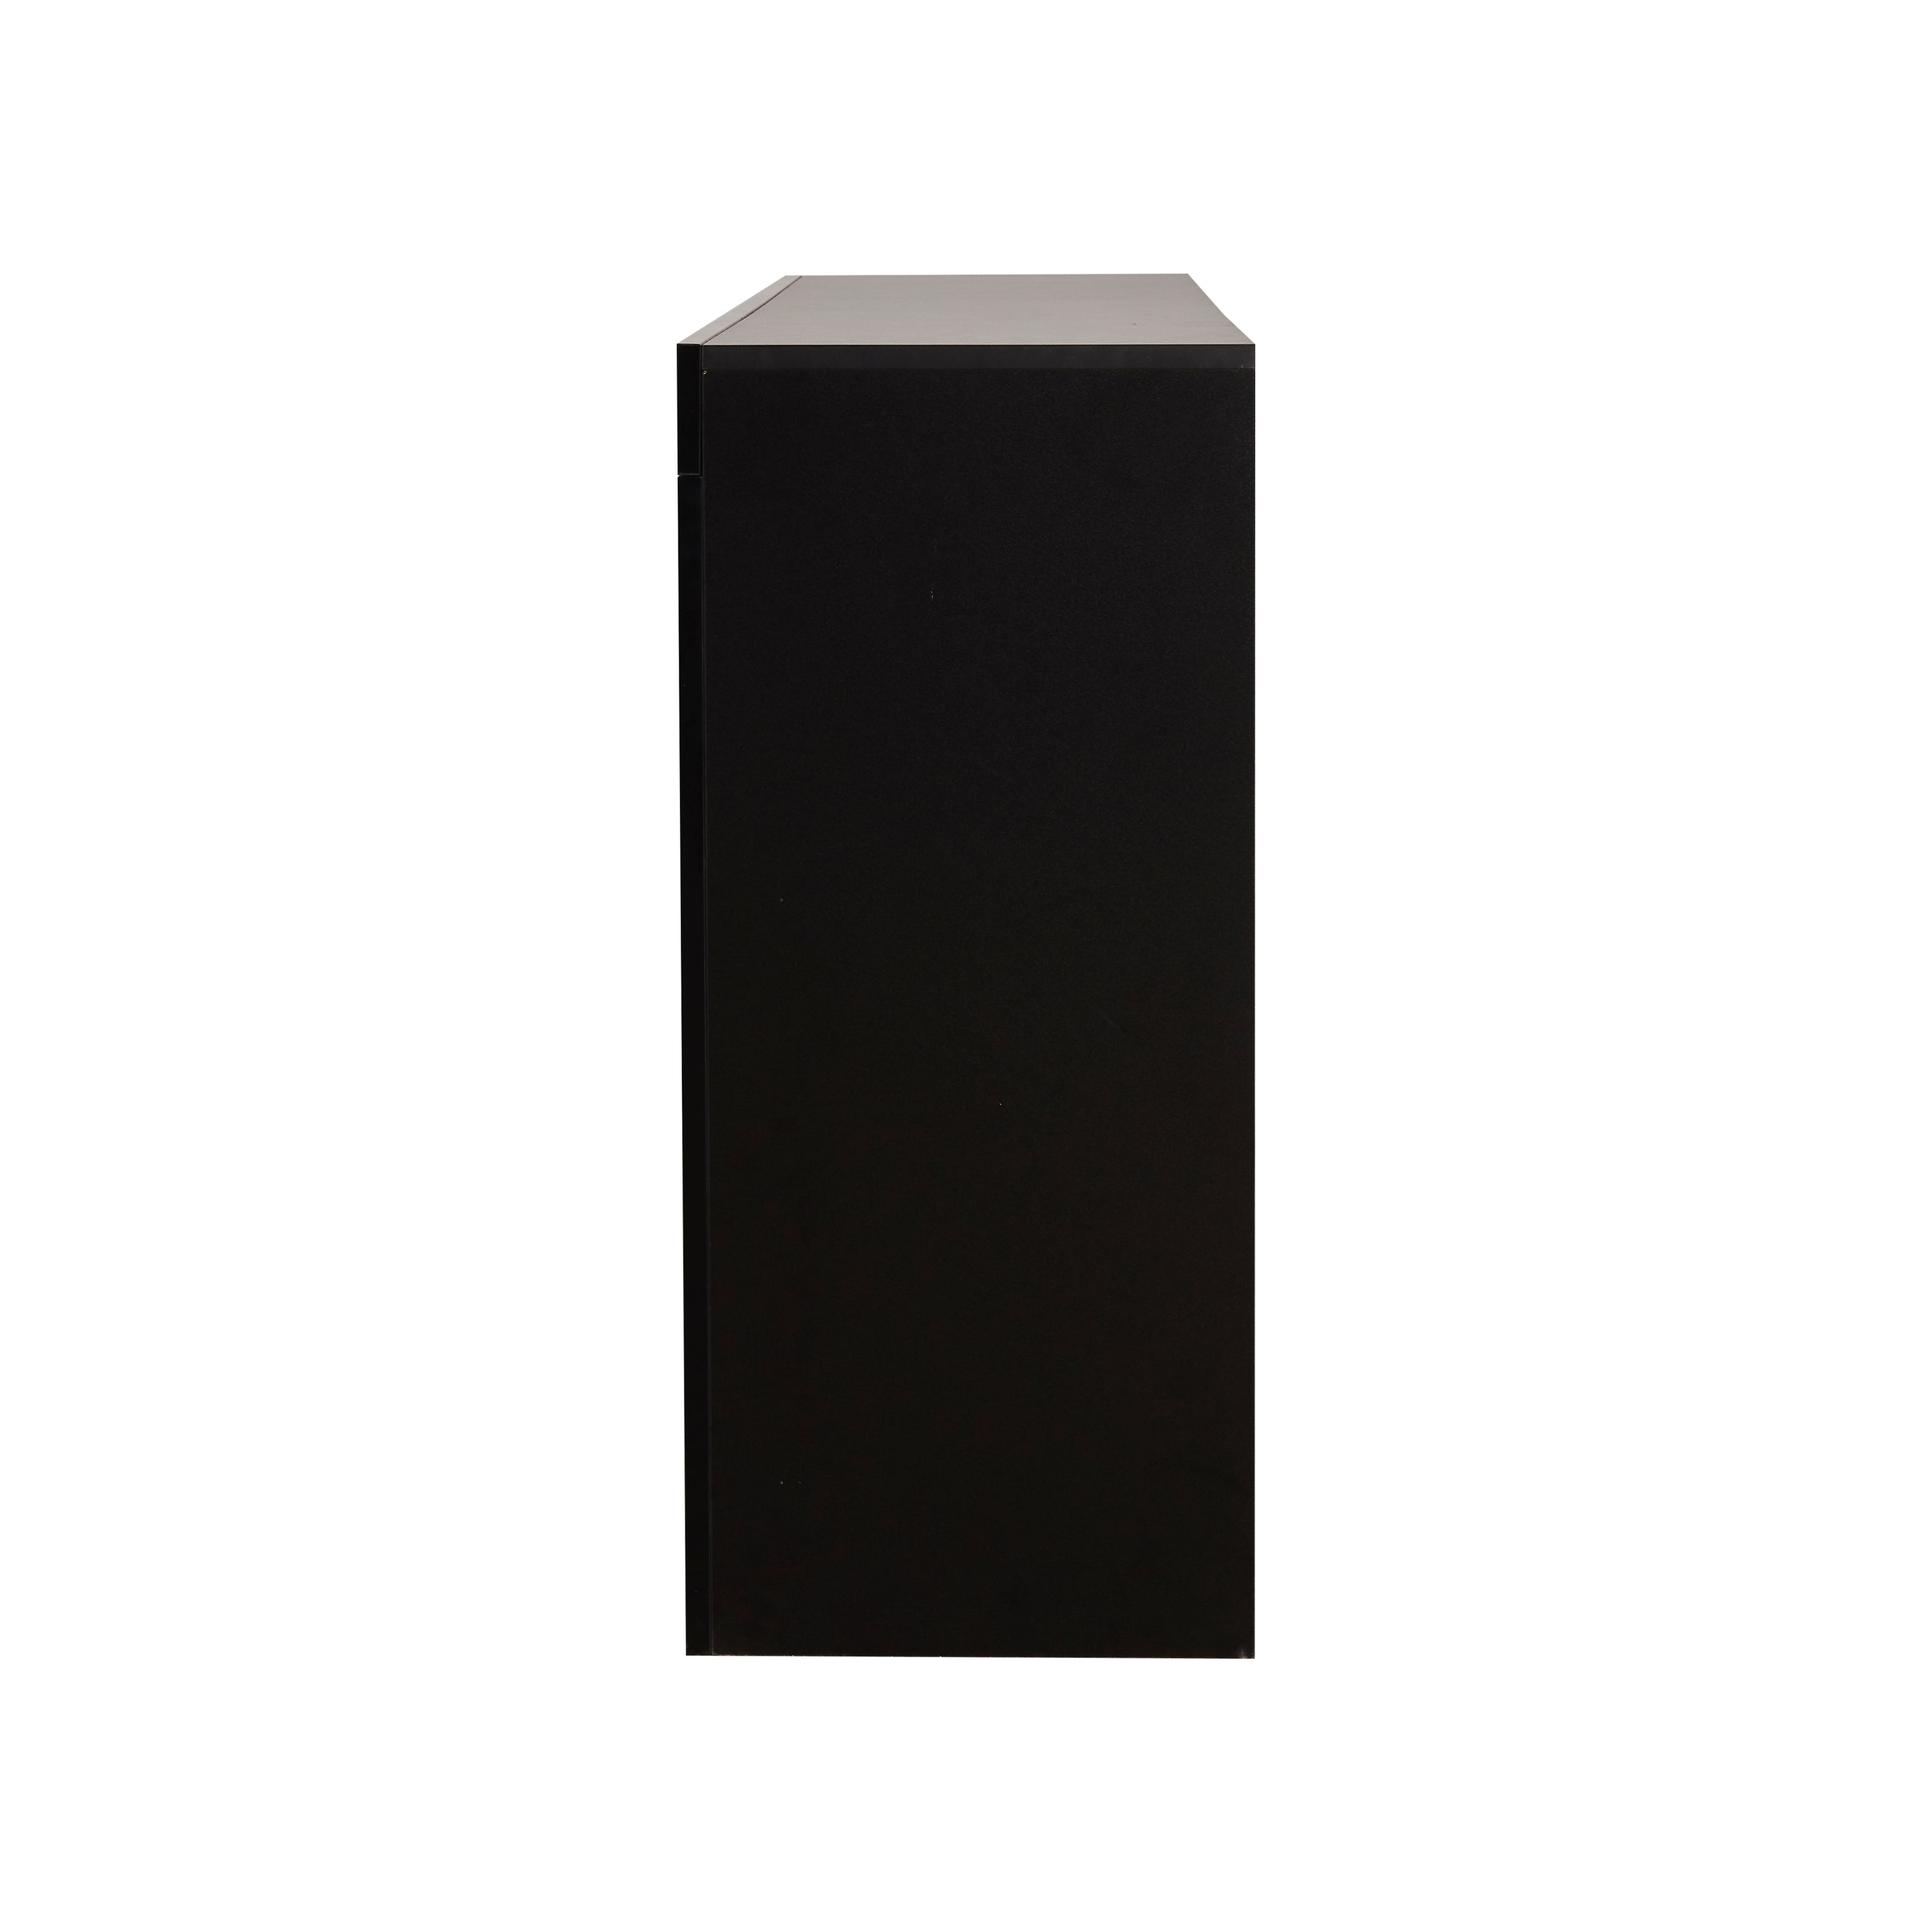 Locker High Gloss with LED Light (Black)